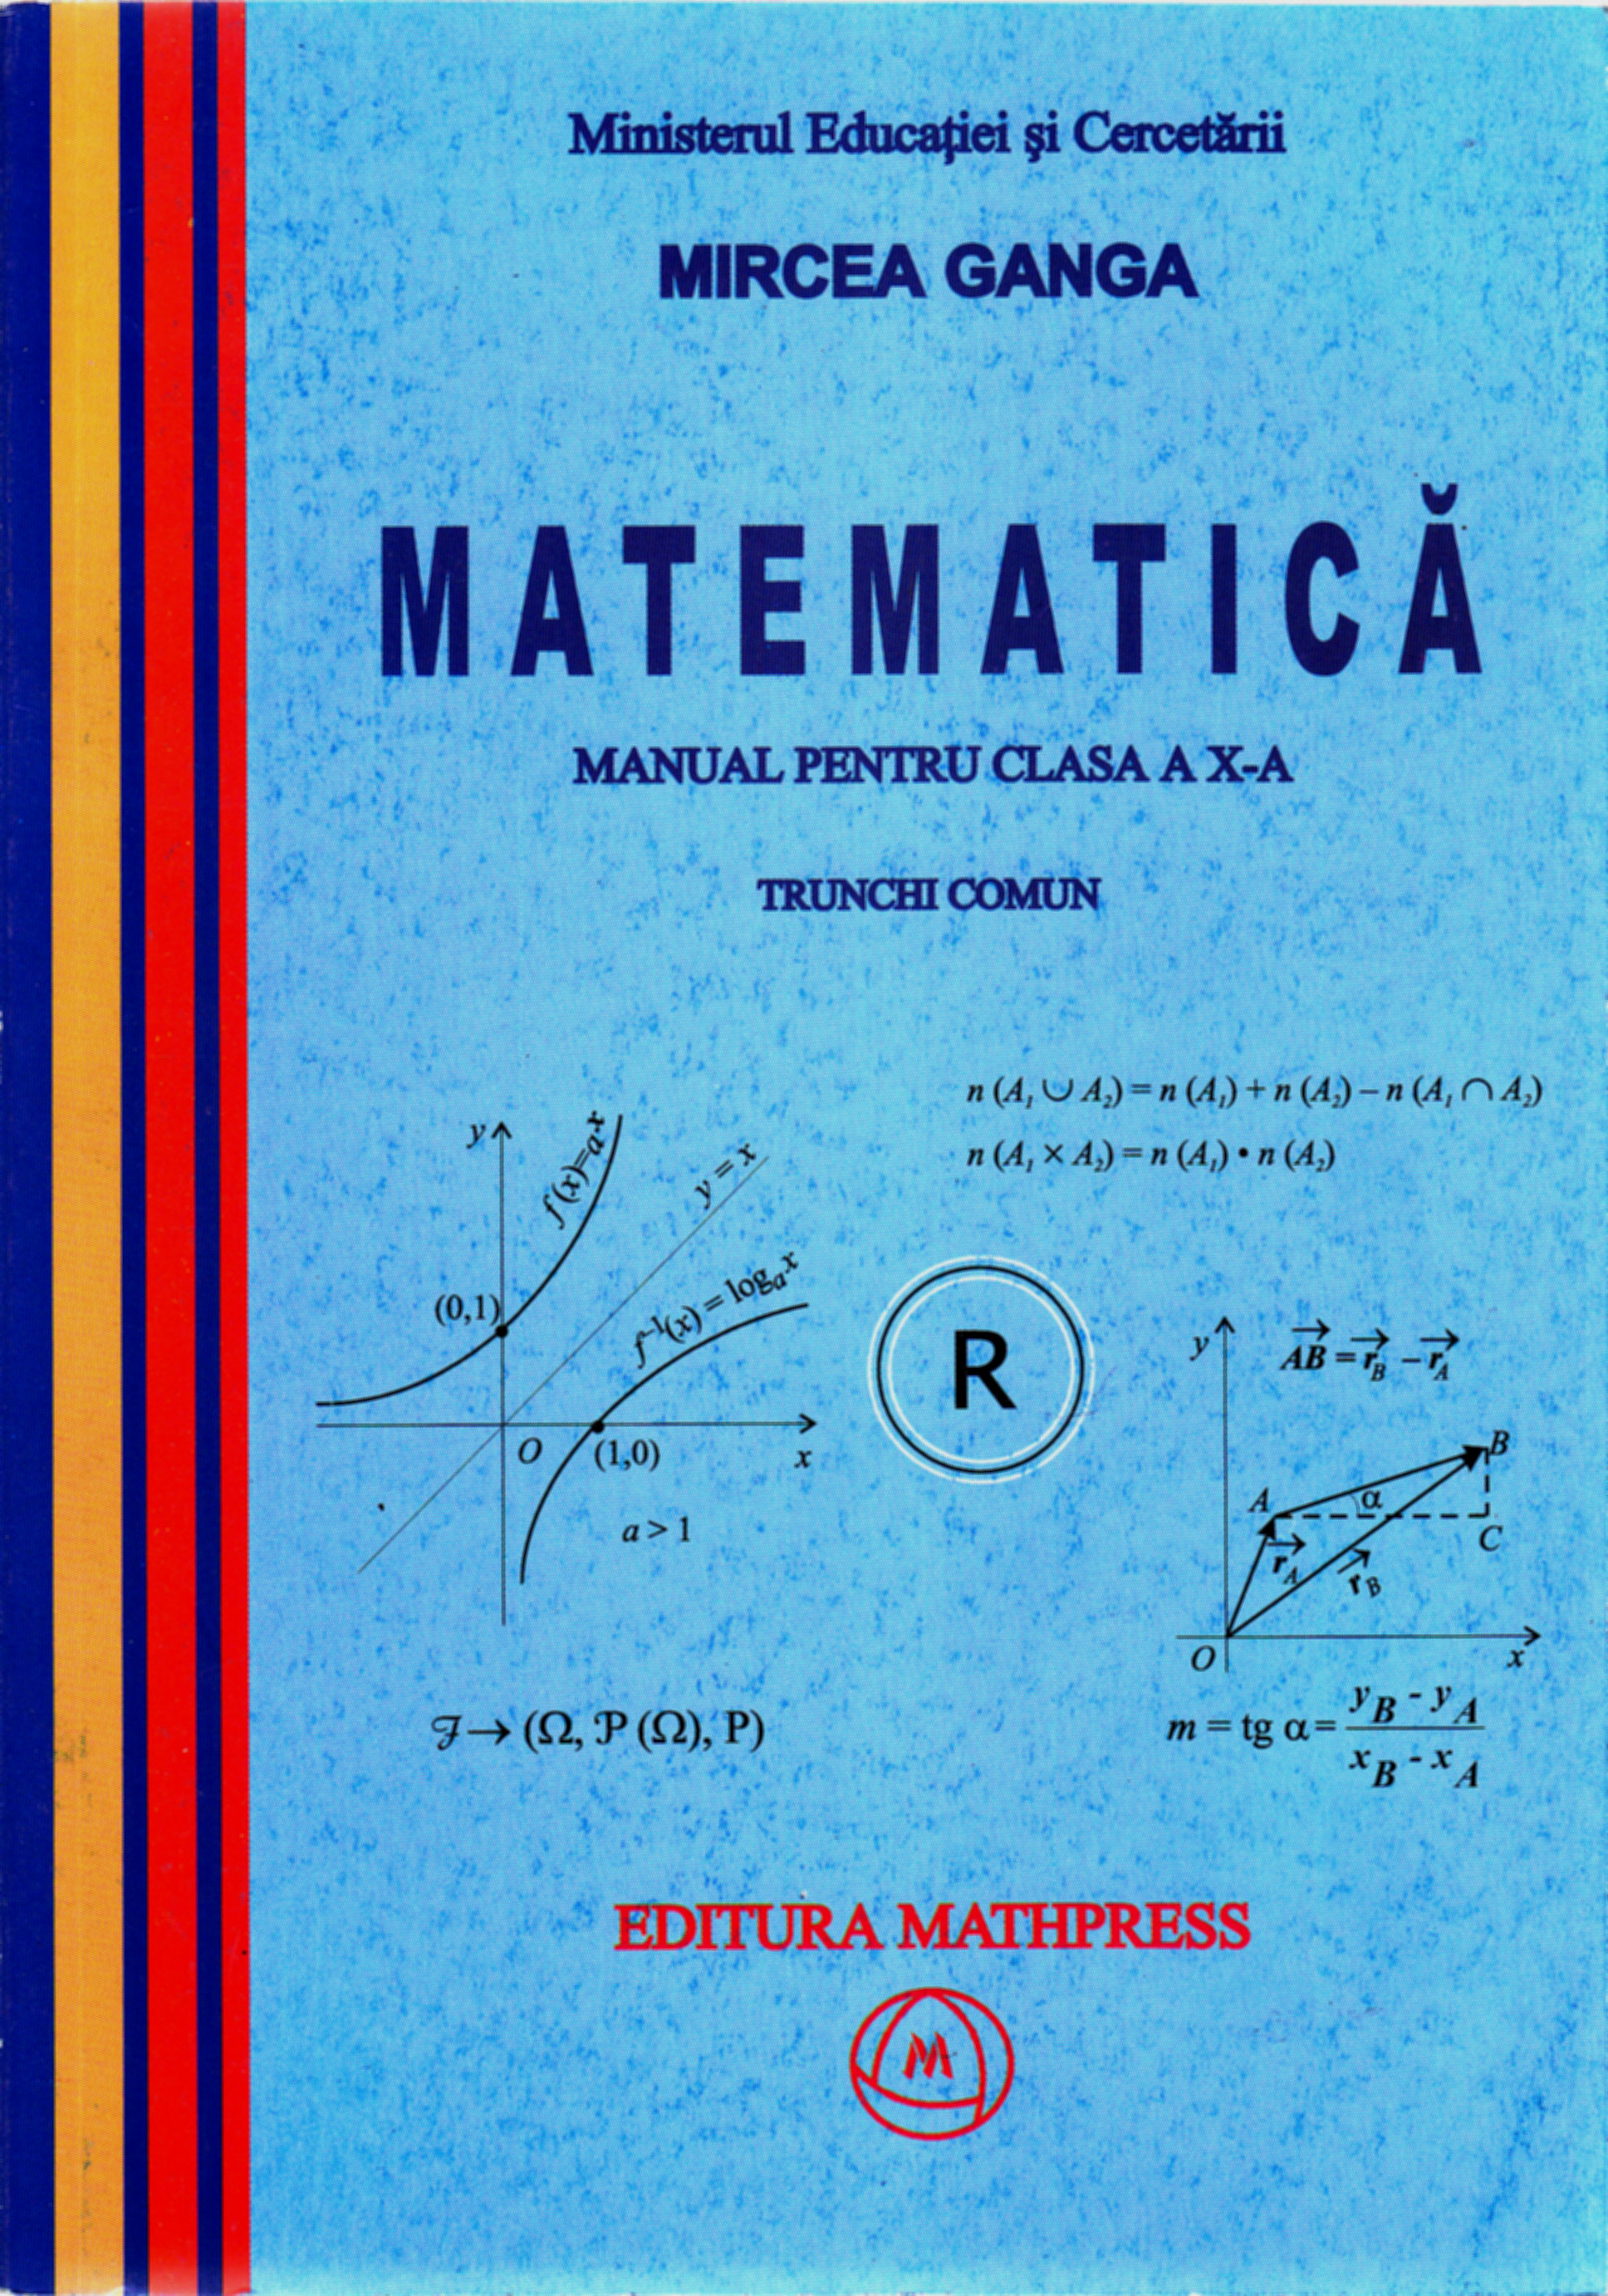 Manual matematica clasa 10 trunchi comun - Mircea Ganga